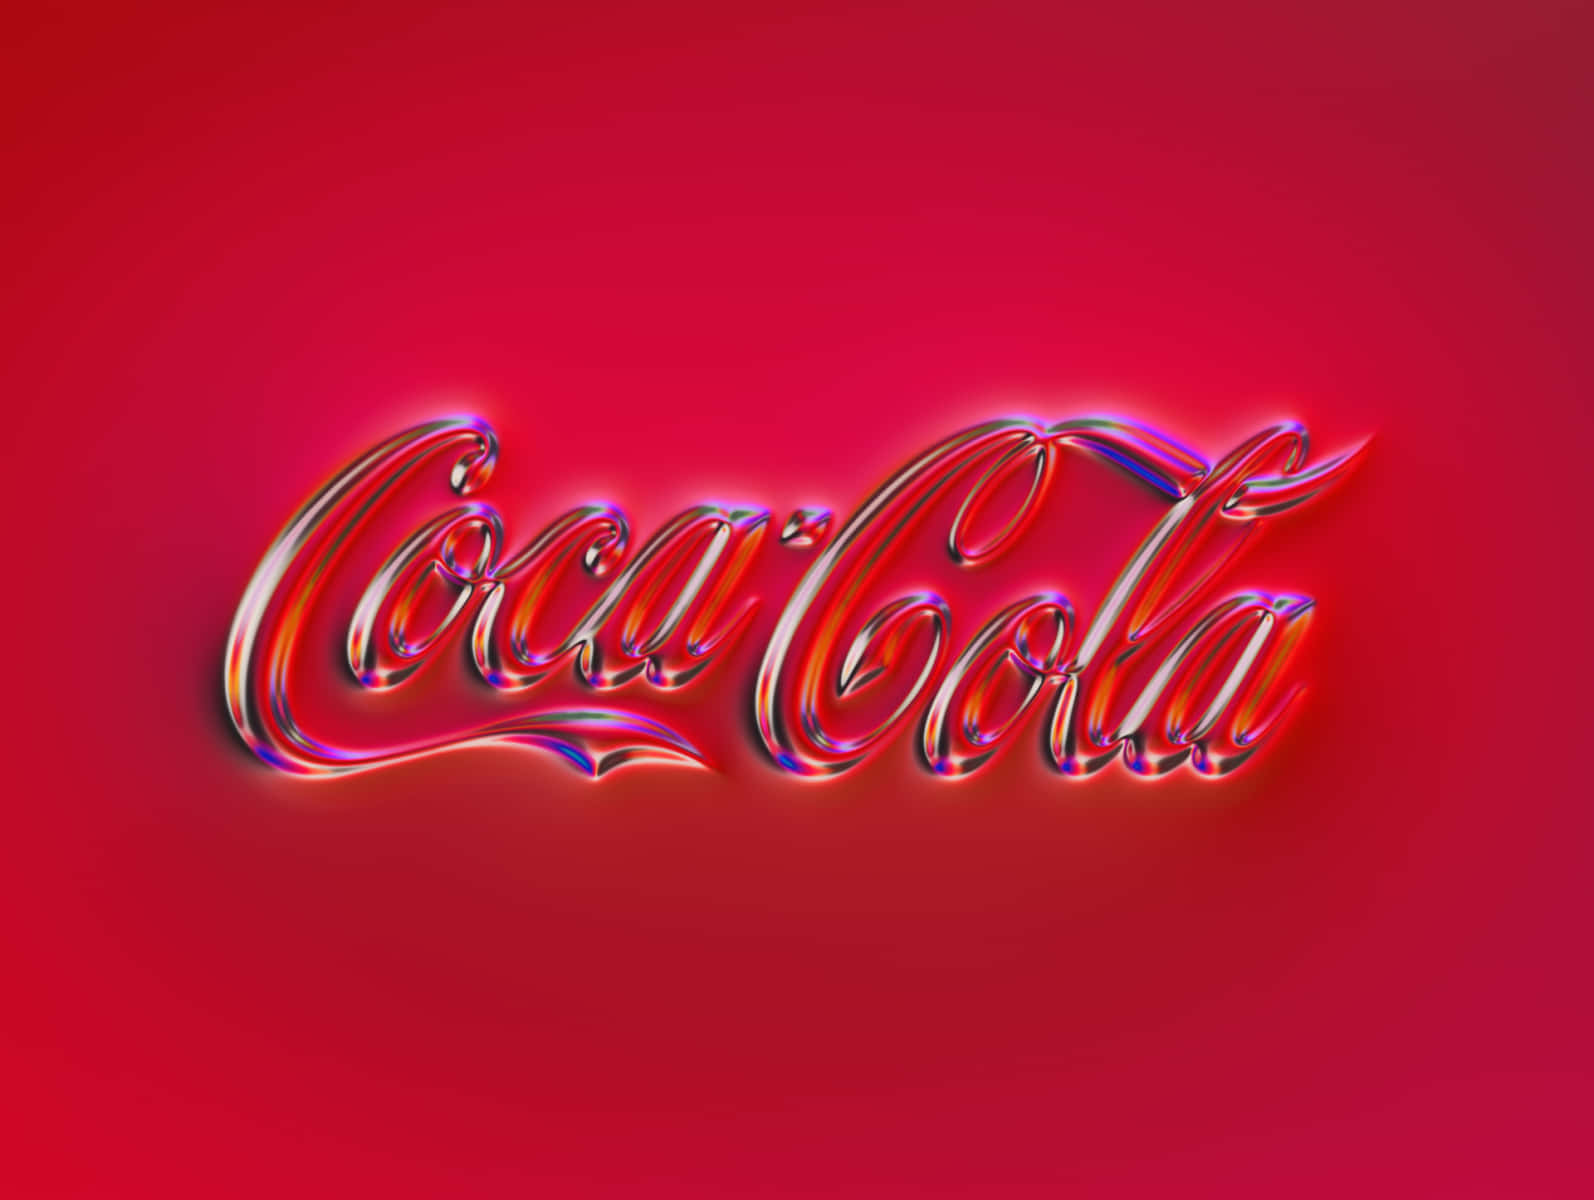 Cocacola-logoet I 3d.